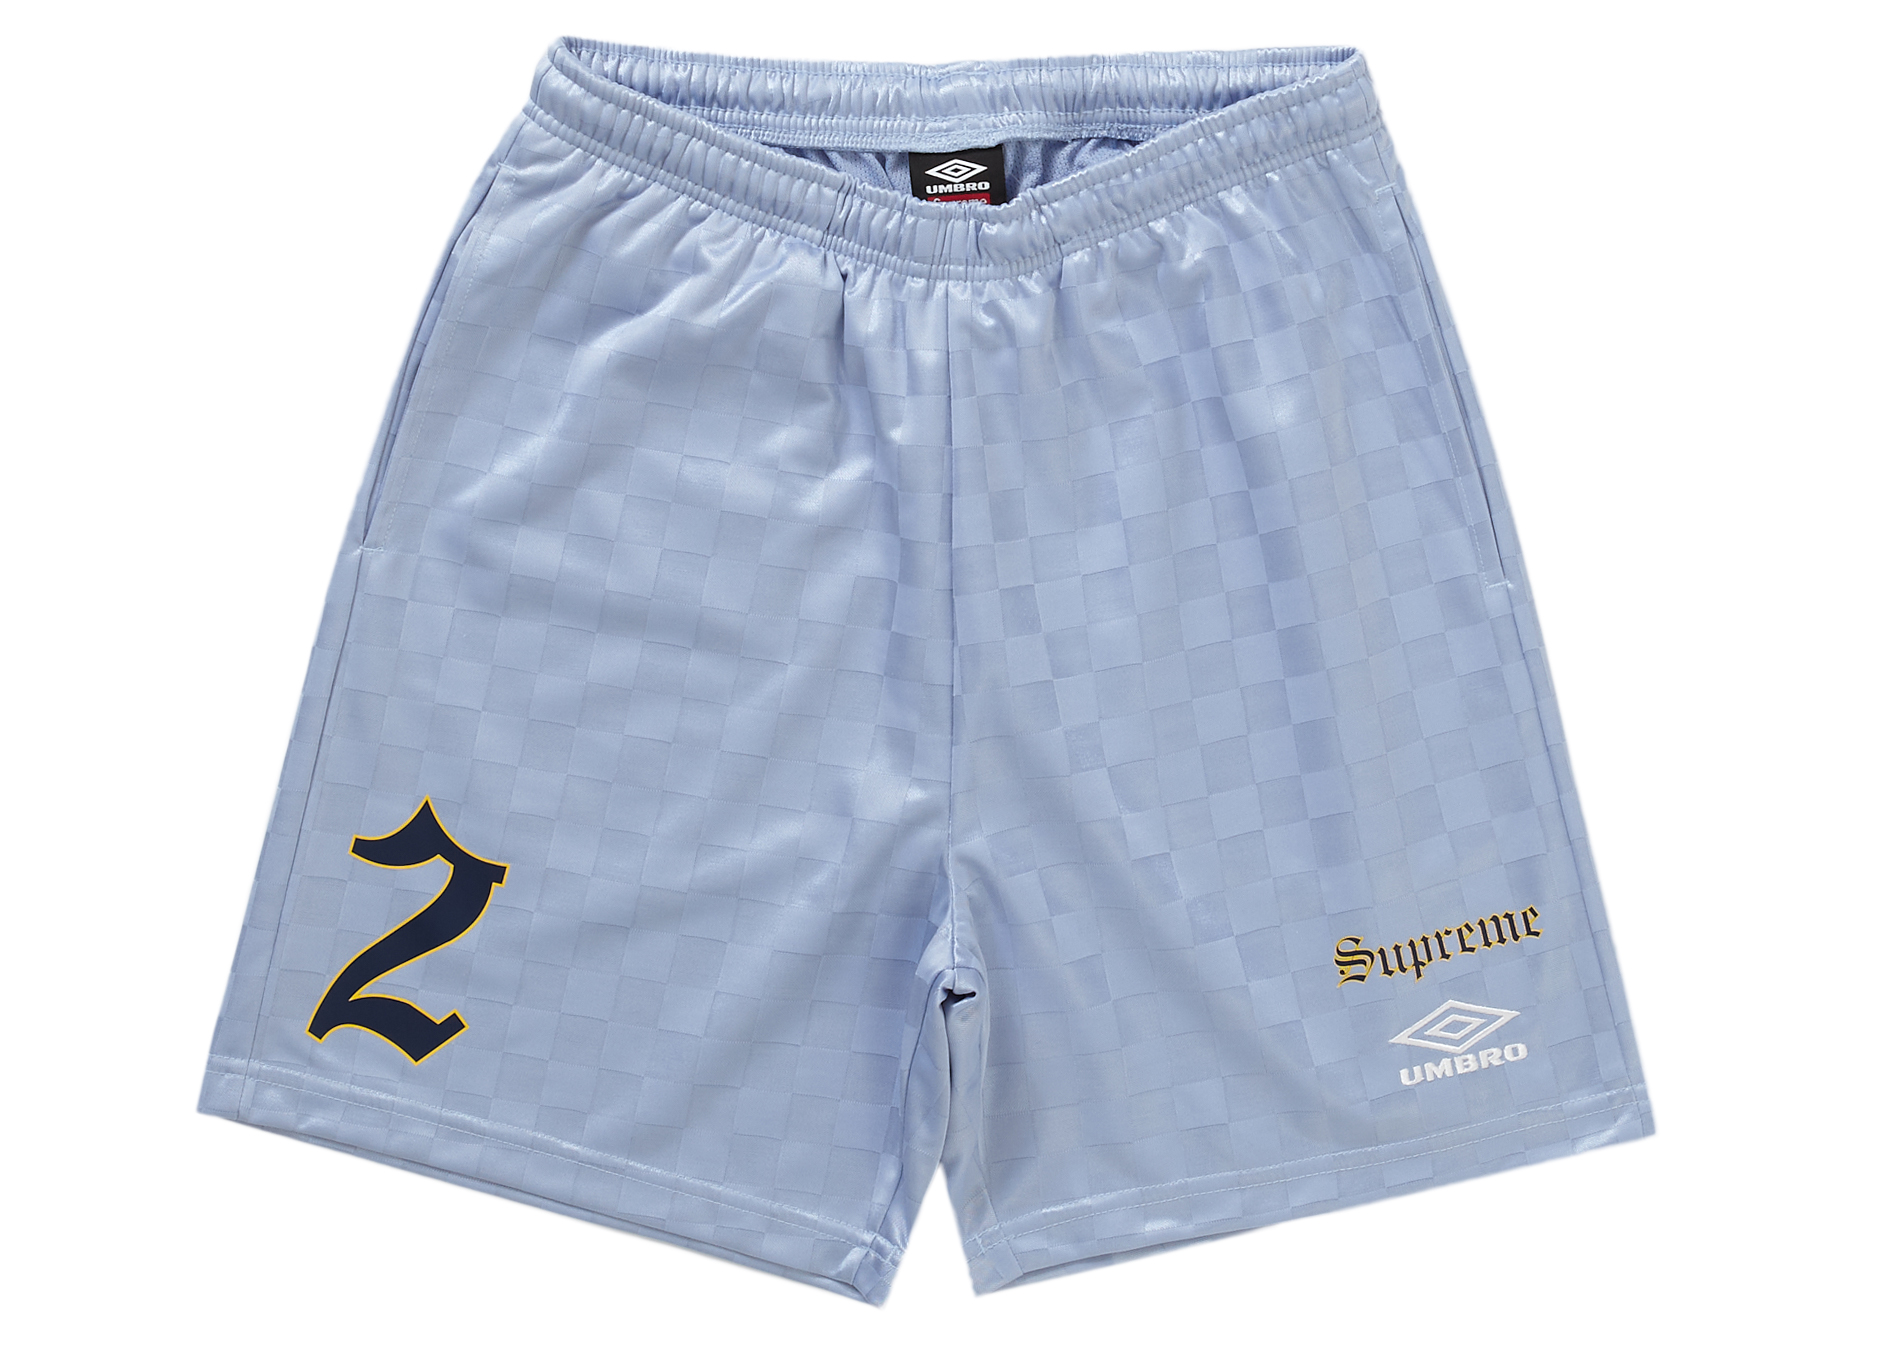 Supreme / Umbro Soccer Short